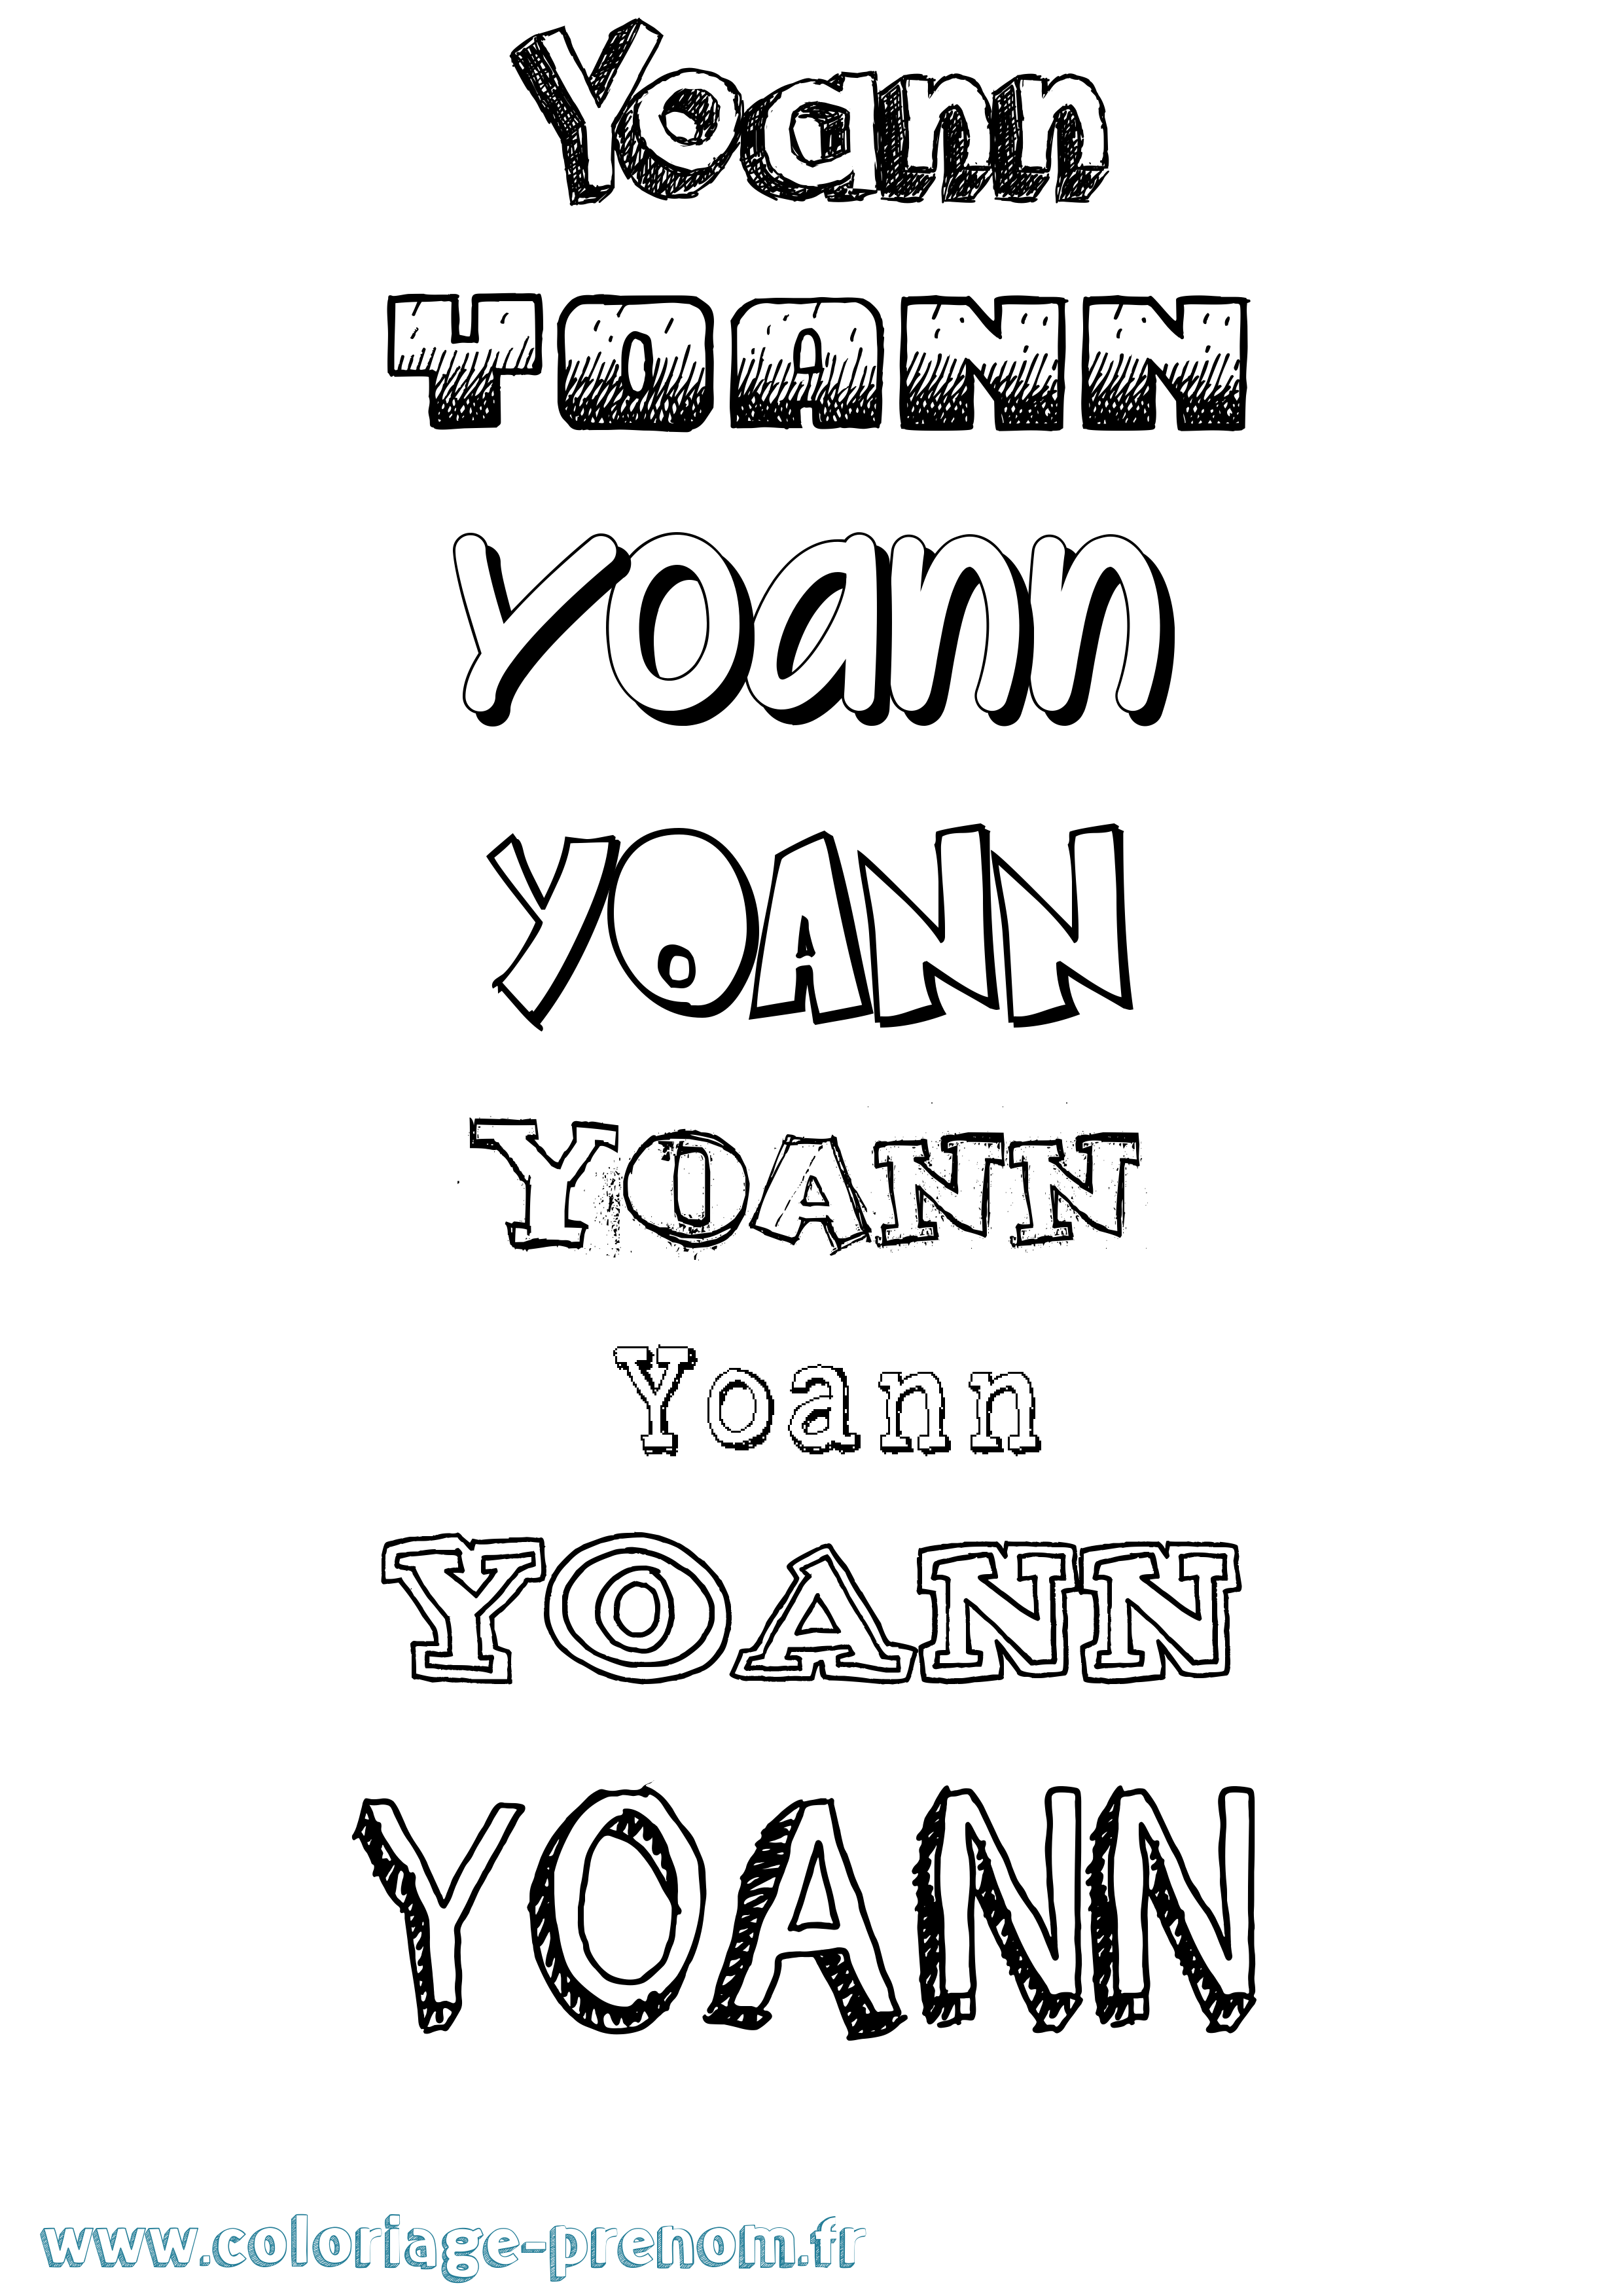 Coloriage prénom Yoann Dessiné